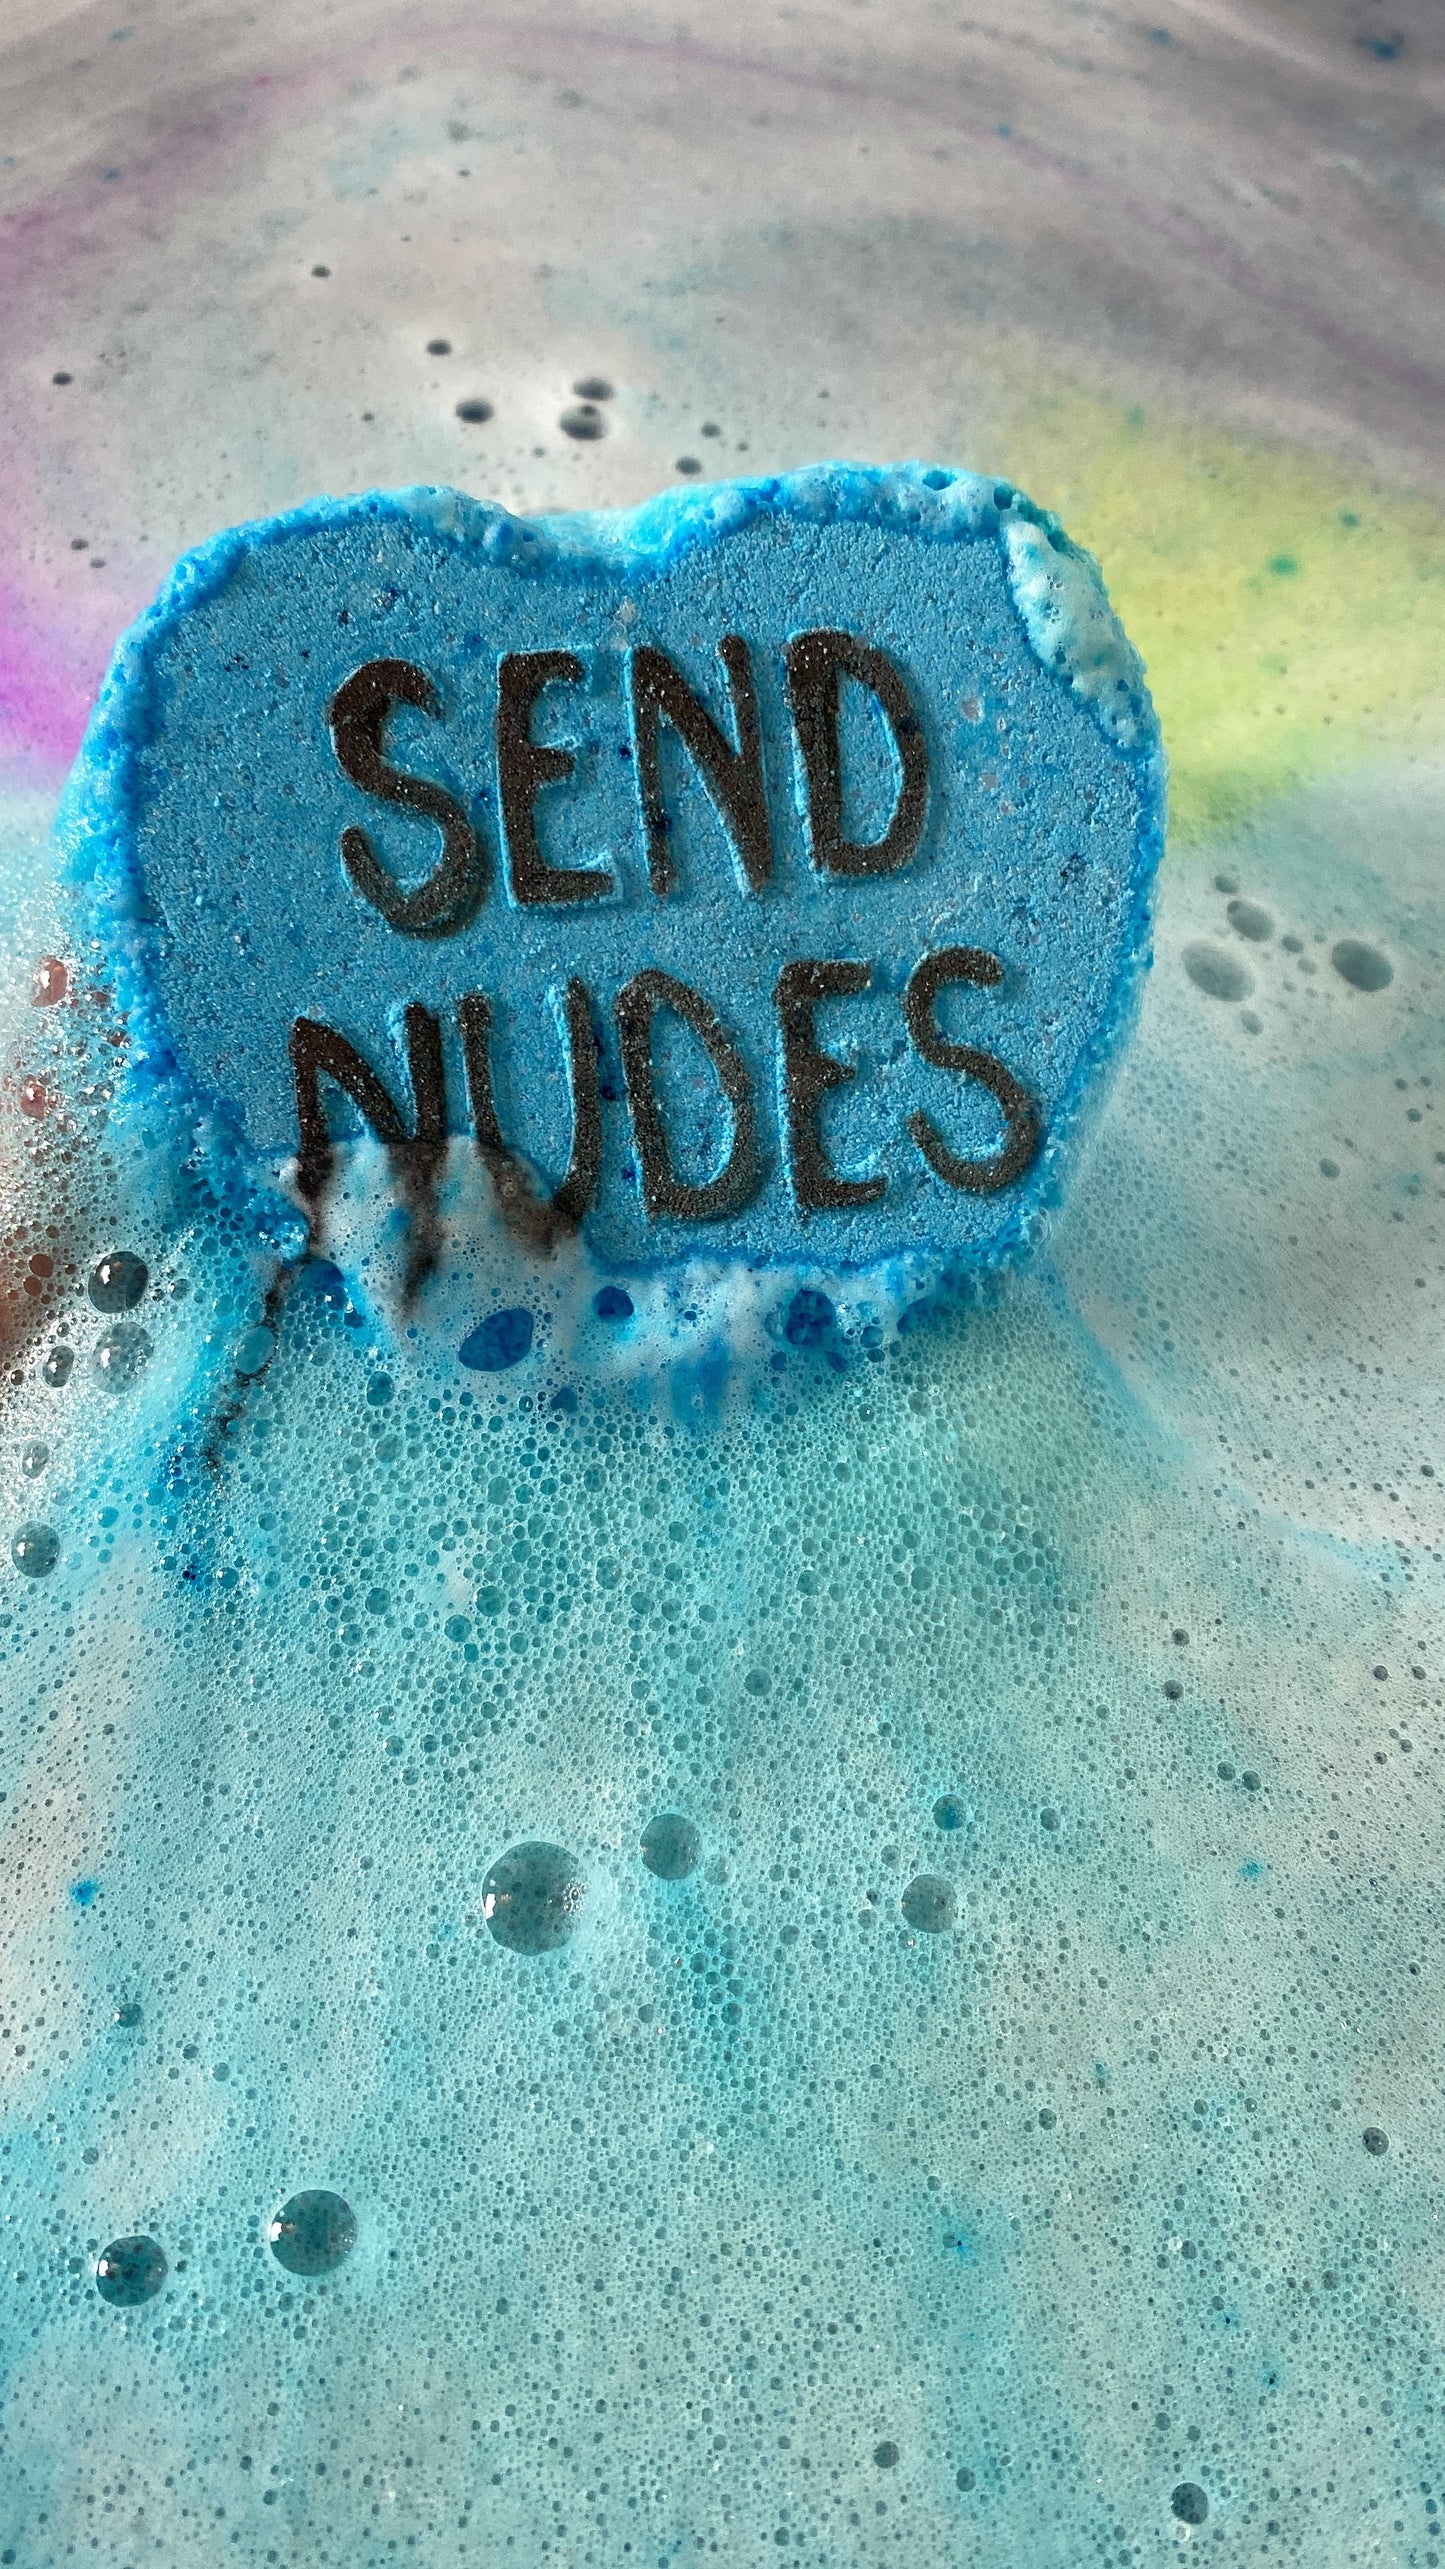 Send Nudes Bath Bomb